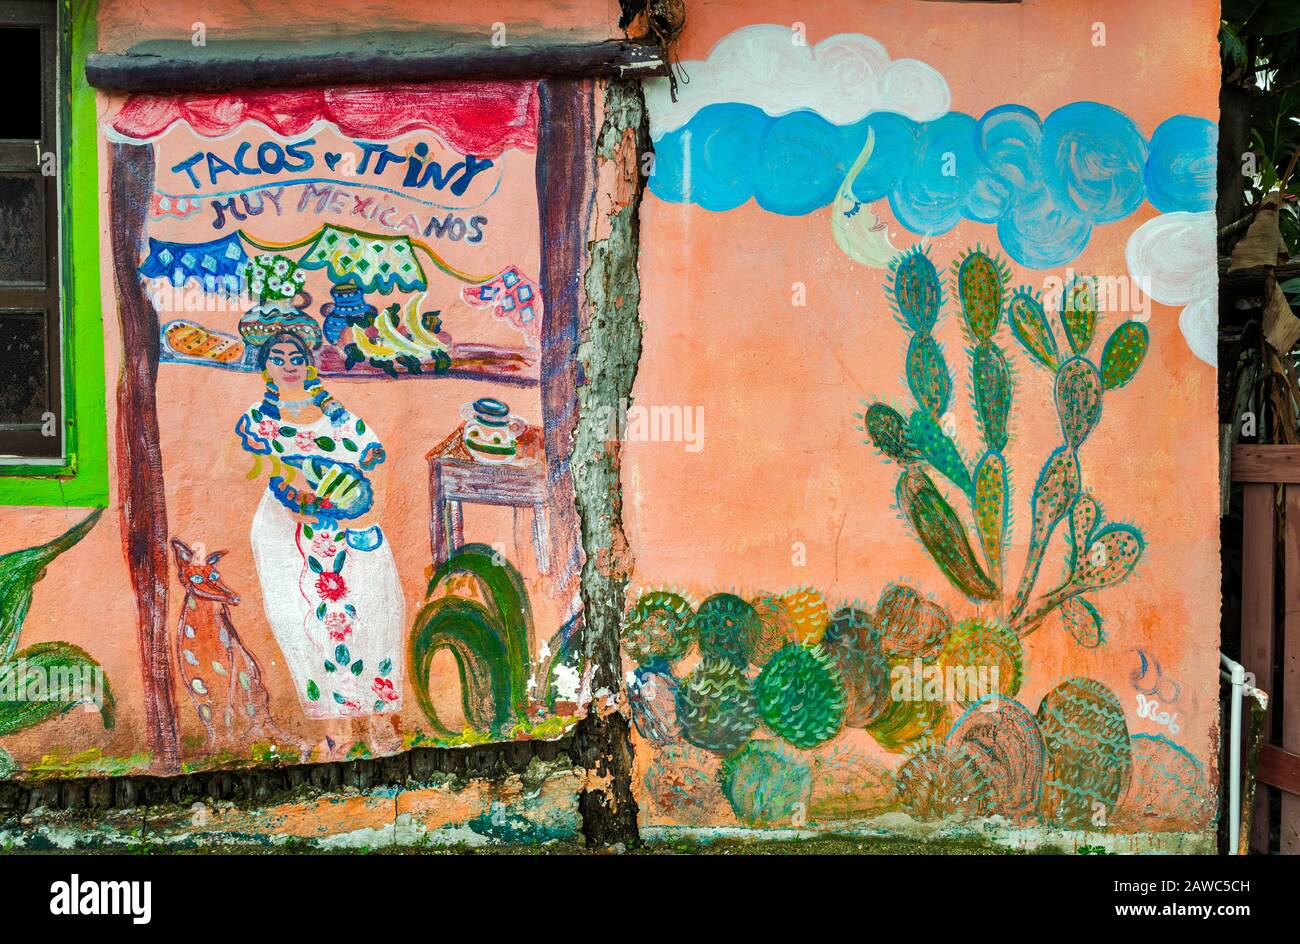 Folk art paintings at wall of restaurant building, now closed, in Puerto Morelos, Riviera Maya, Yucatan Peninsula, Quintana Roo state, Mexico Stock Photo